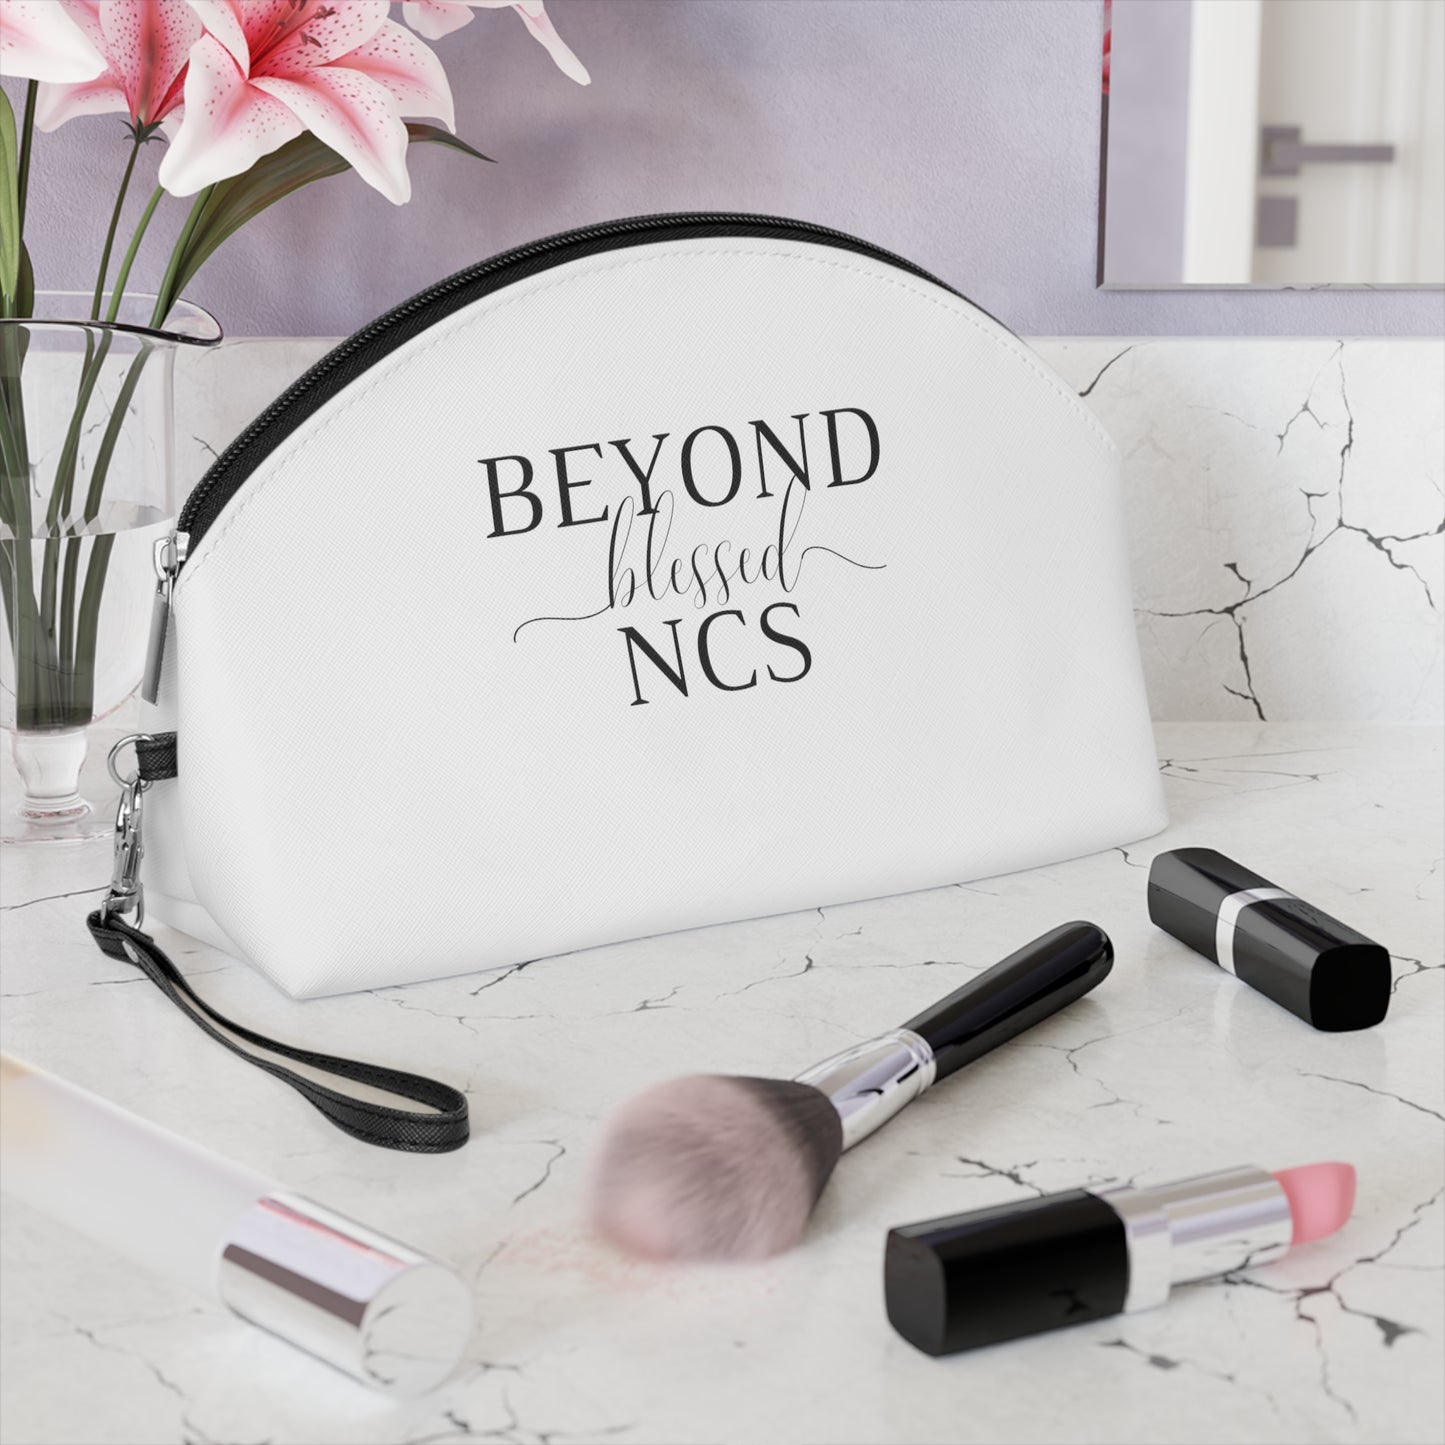 Beyond Blessed NCS - Makeup Bag